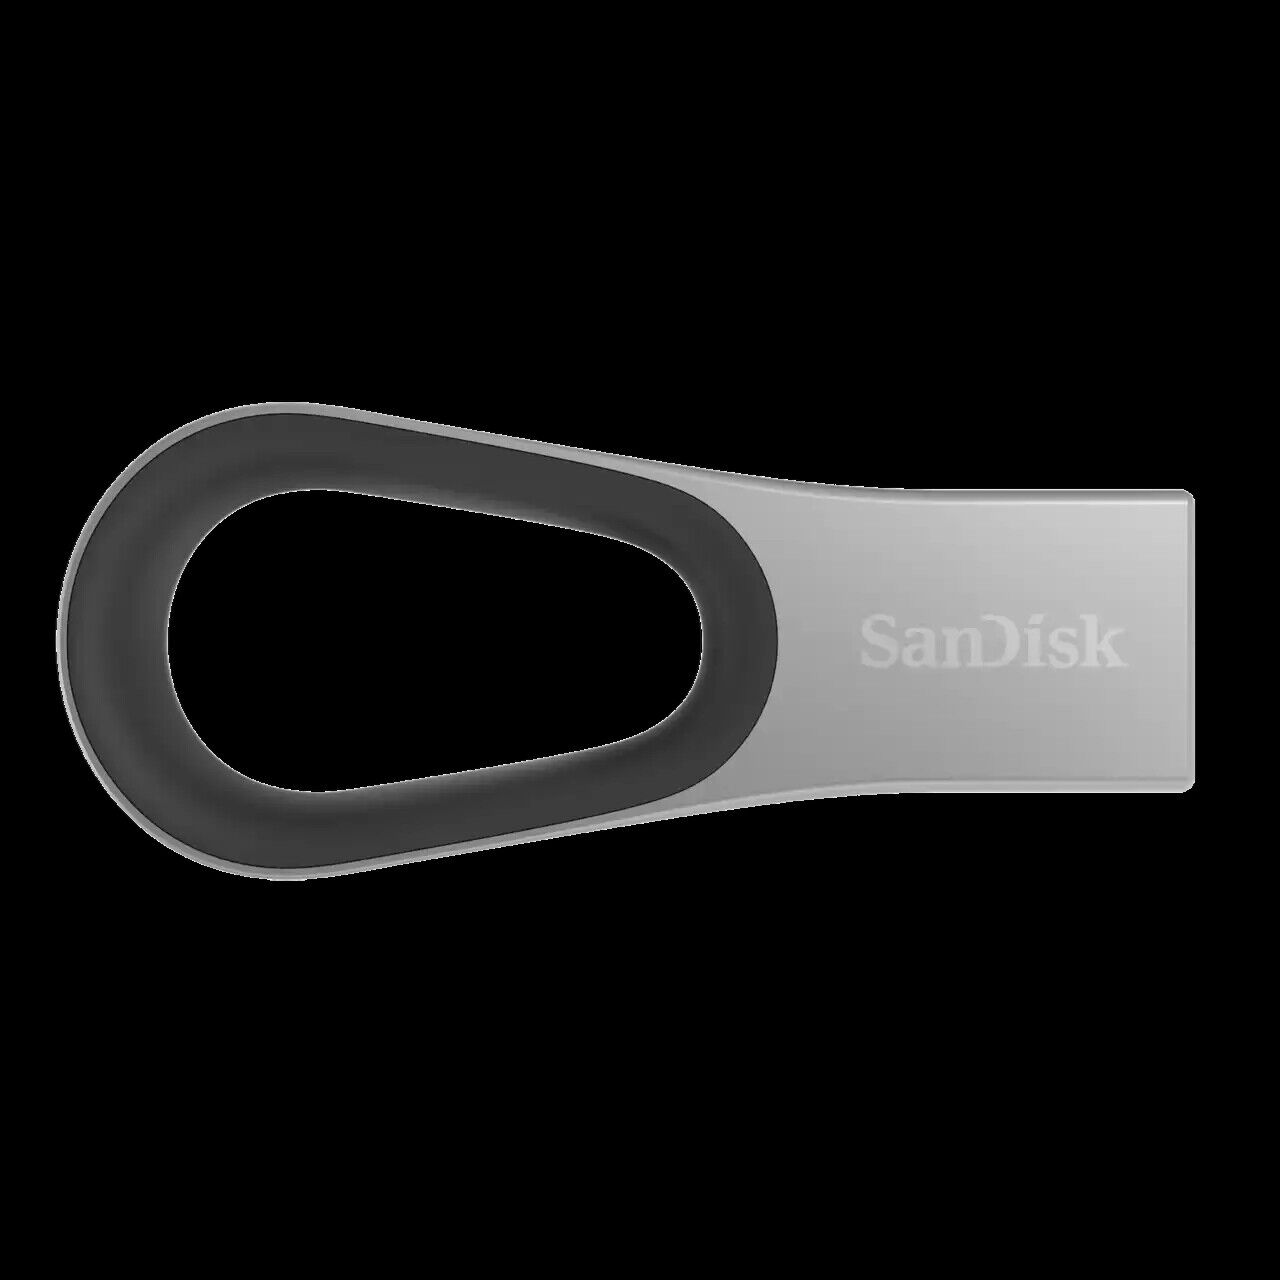 SanDisk 64GB Ultra Loop USB 3.0 Flash Drive - SDCZ93-064G-G46